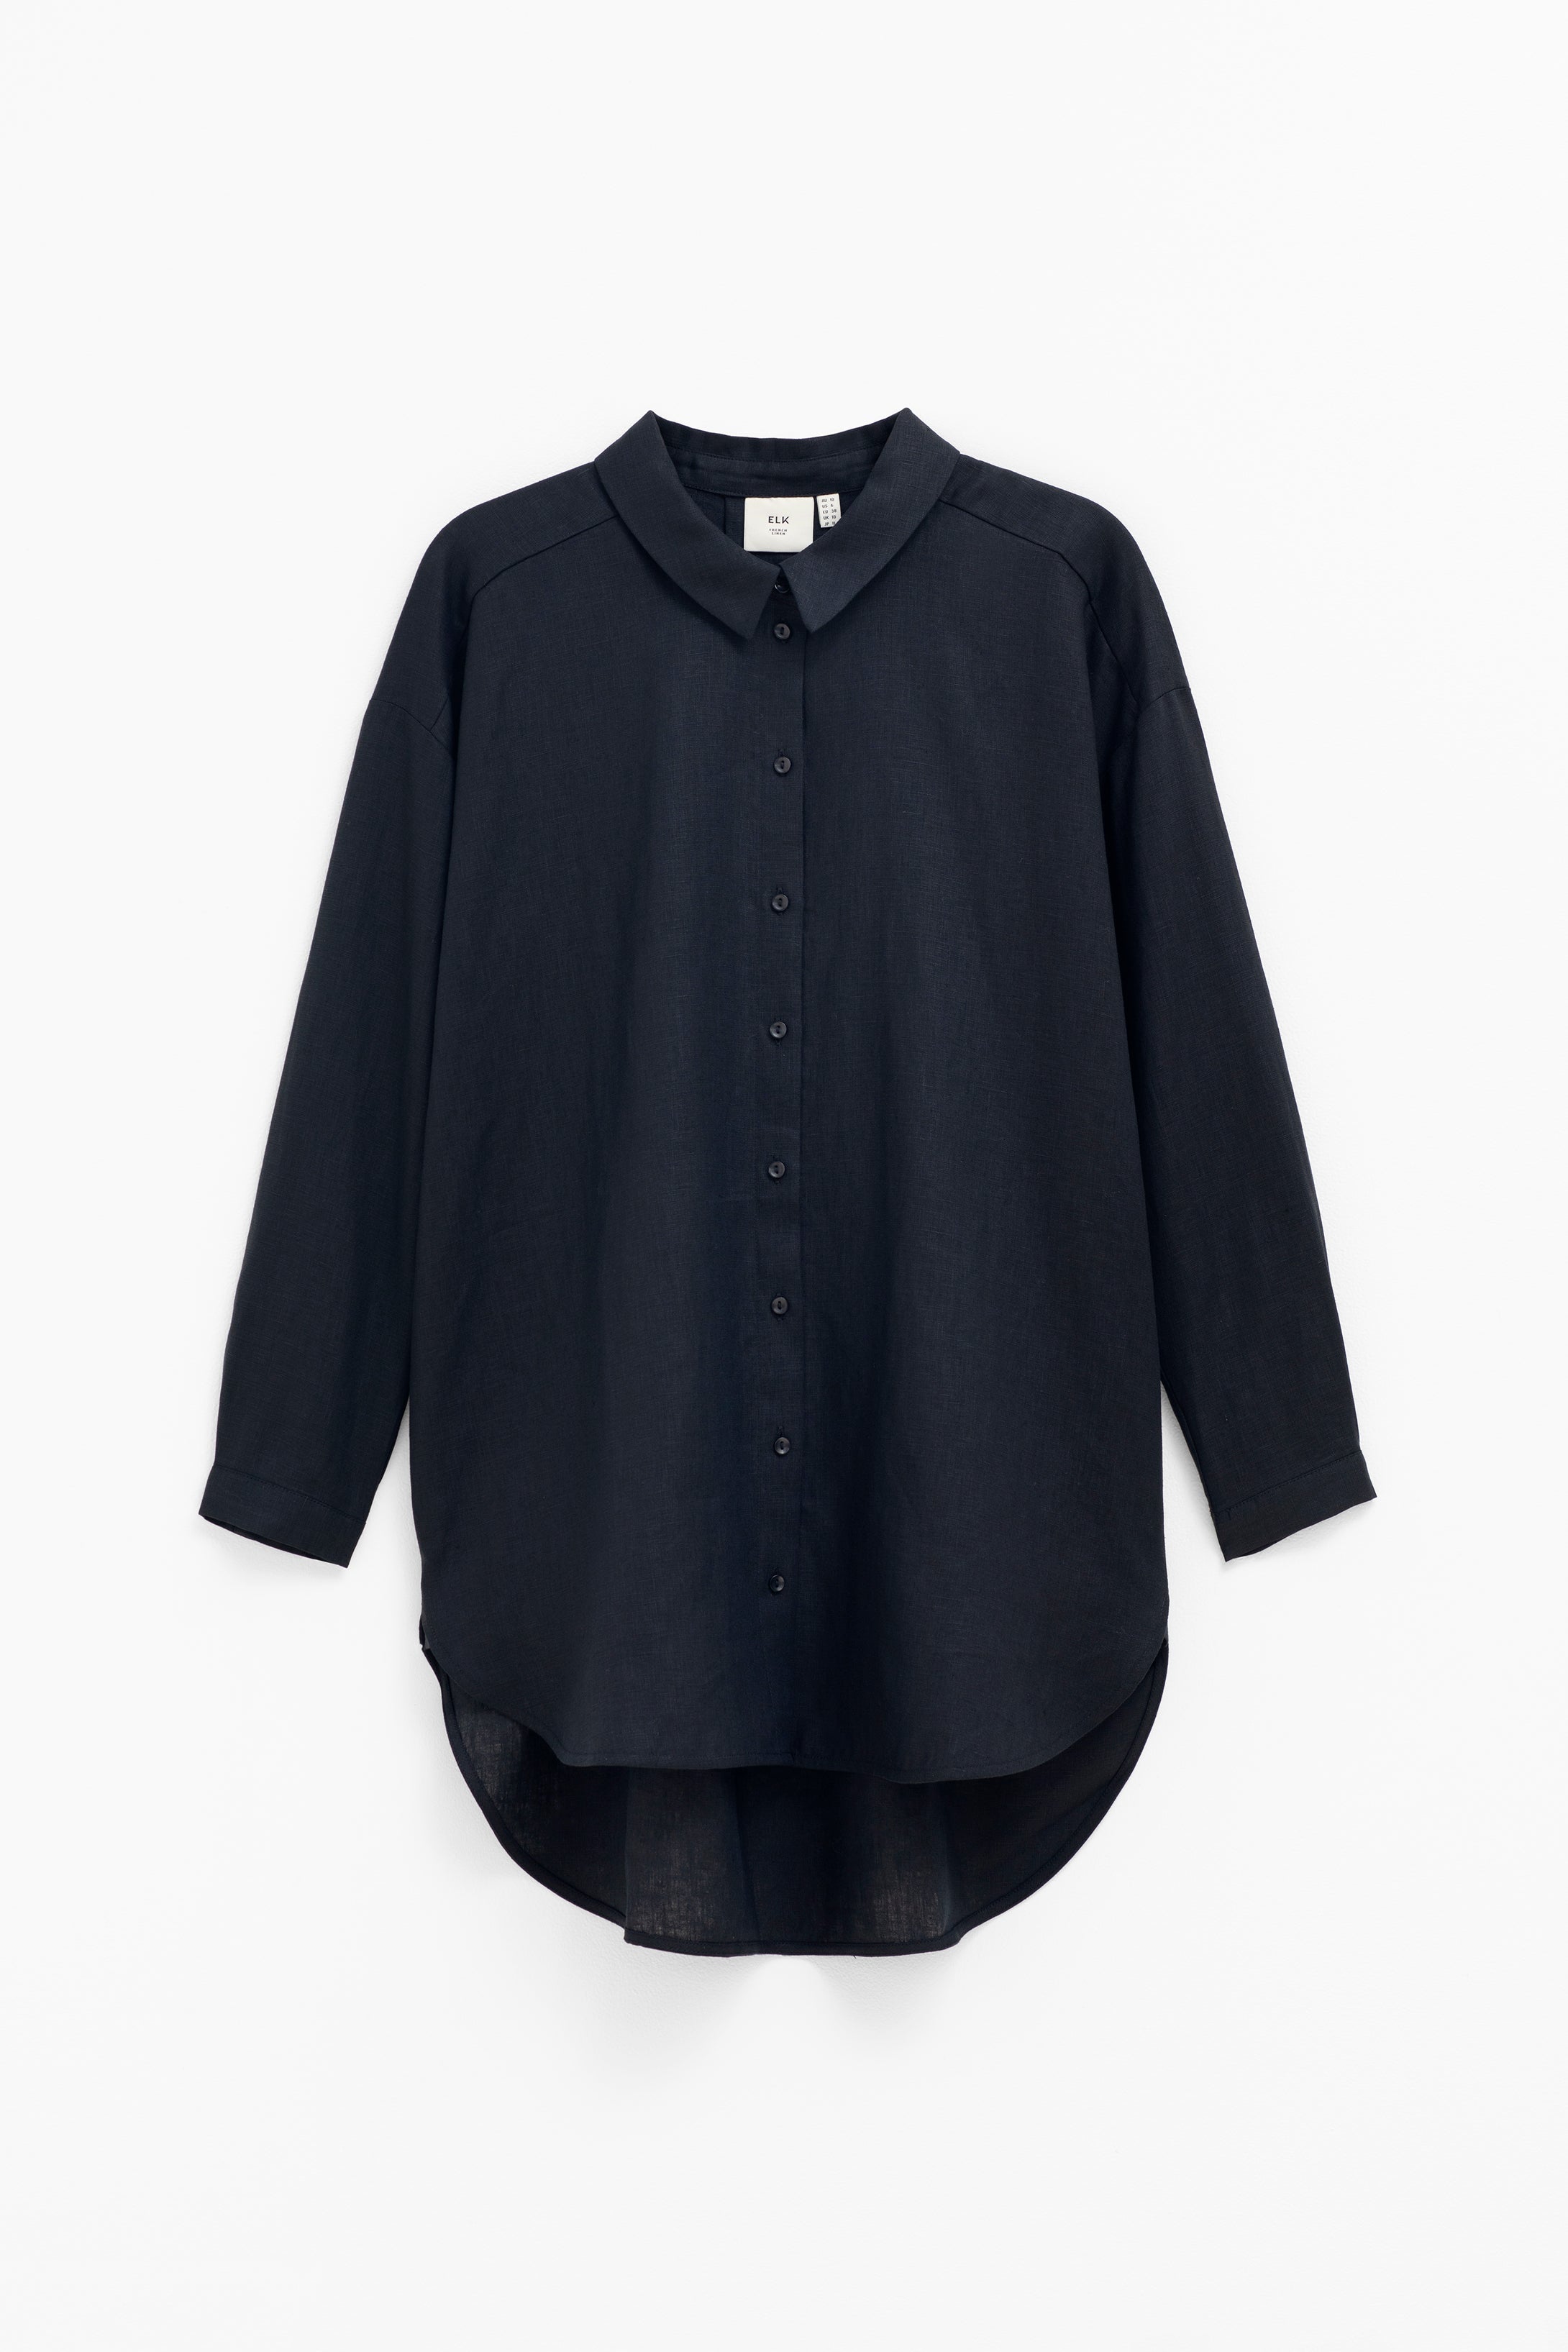 Pre-loved Yenna black linen shirt